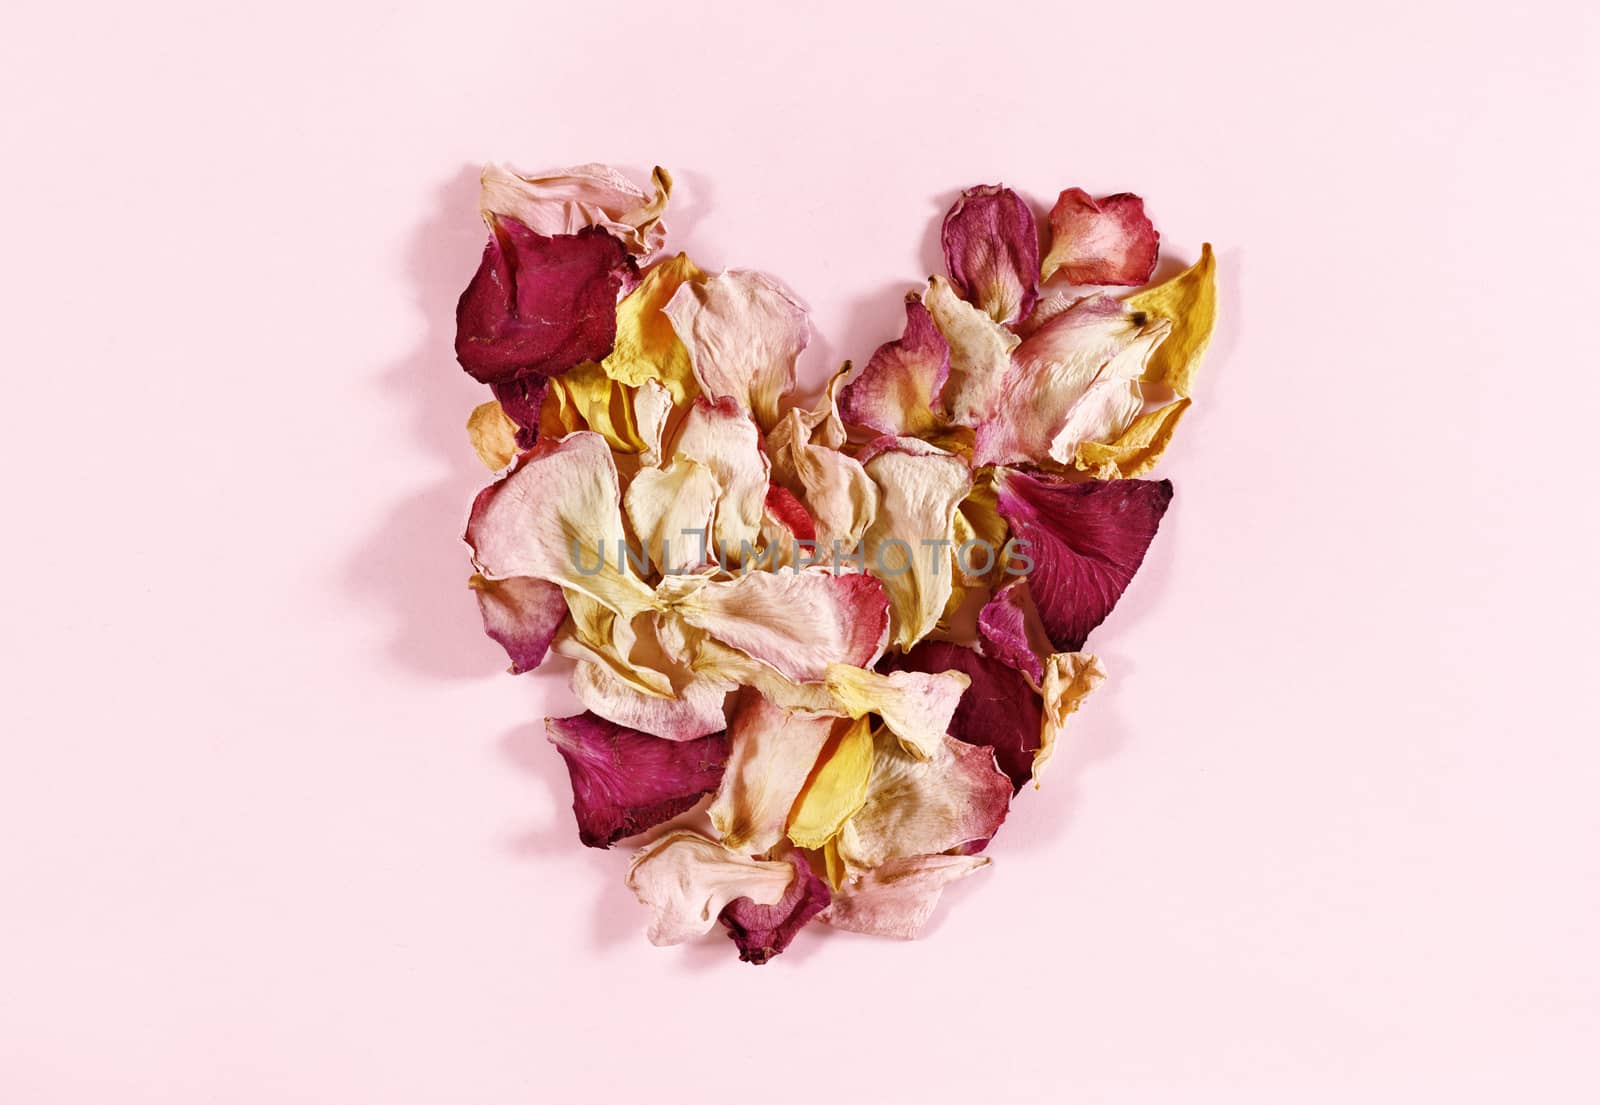 Heart shape with petals by victimewalker